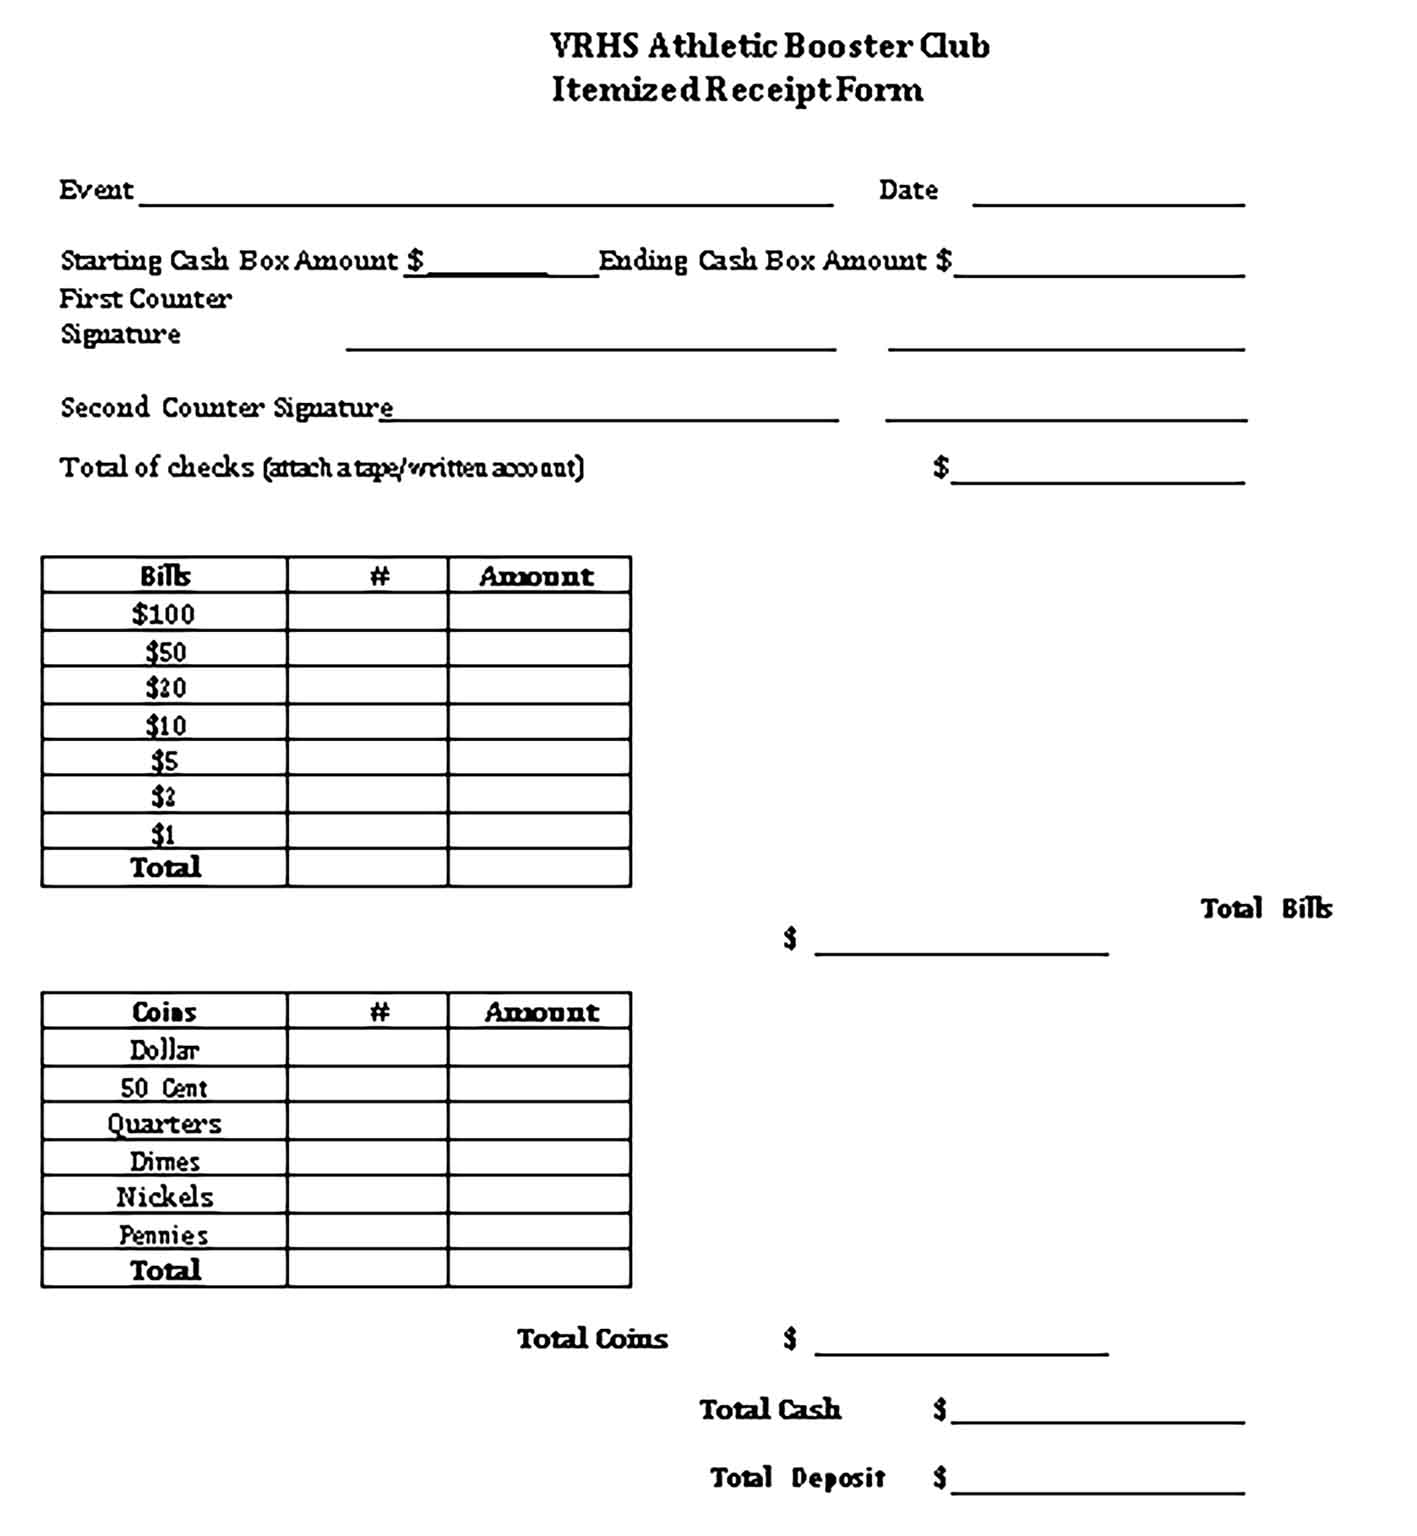 Sample Itemized Receipt Form Templates